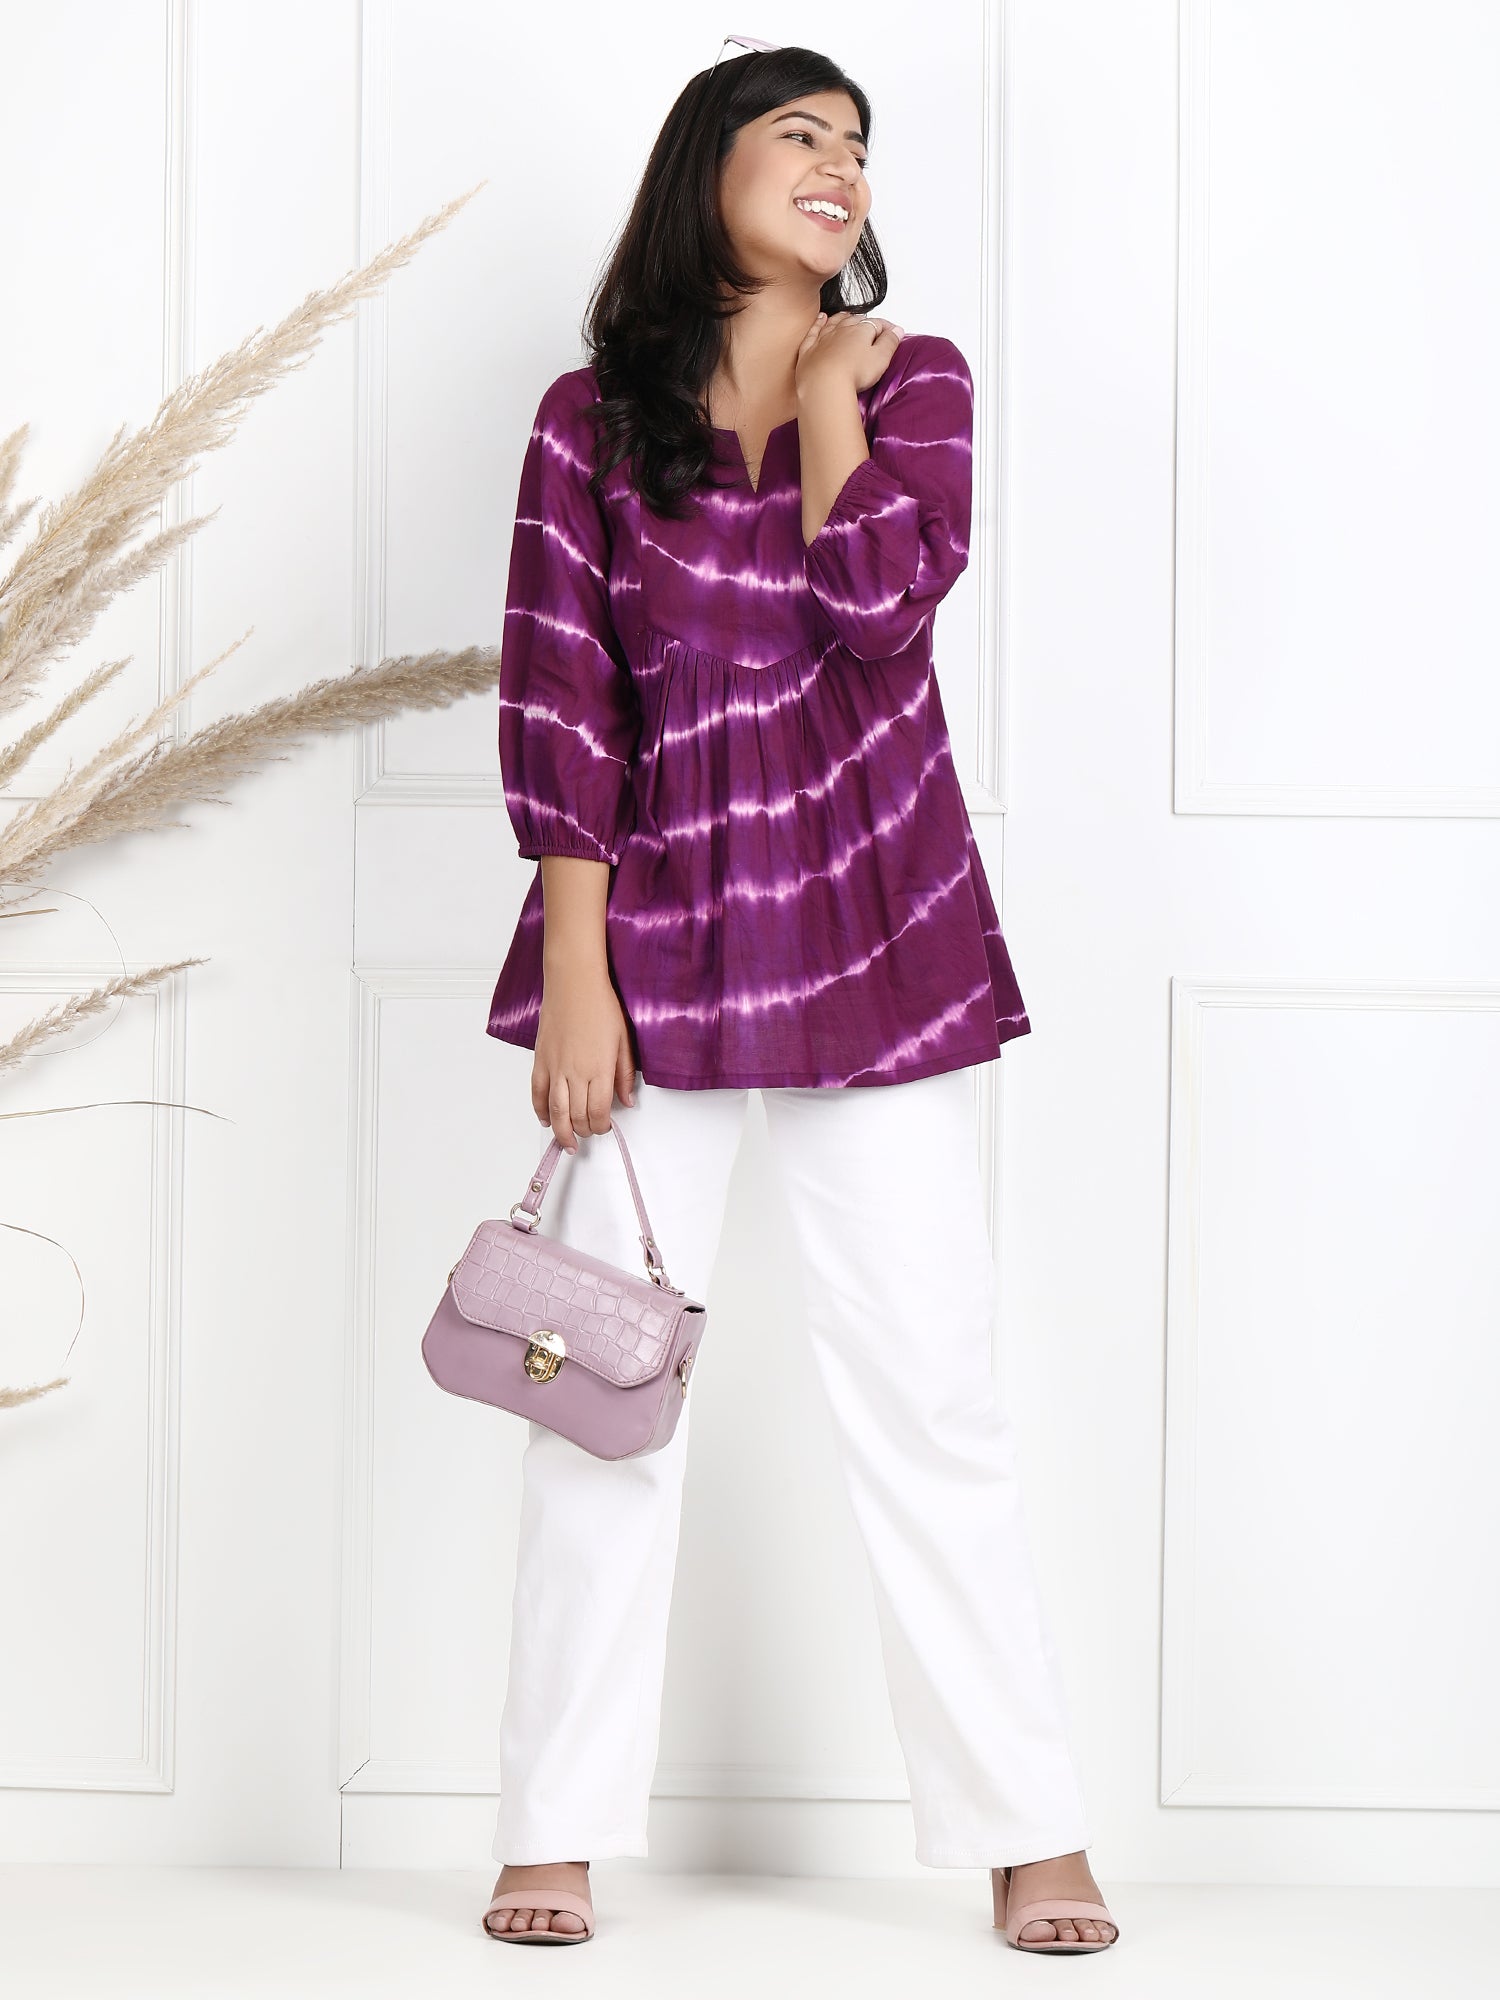 Buy cotton shibori print tops online for women